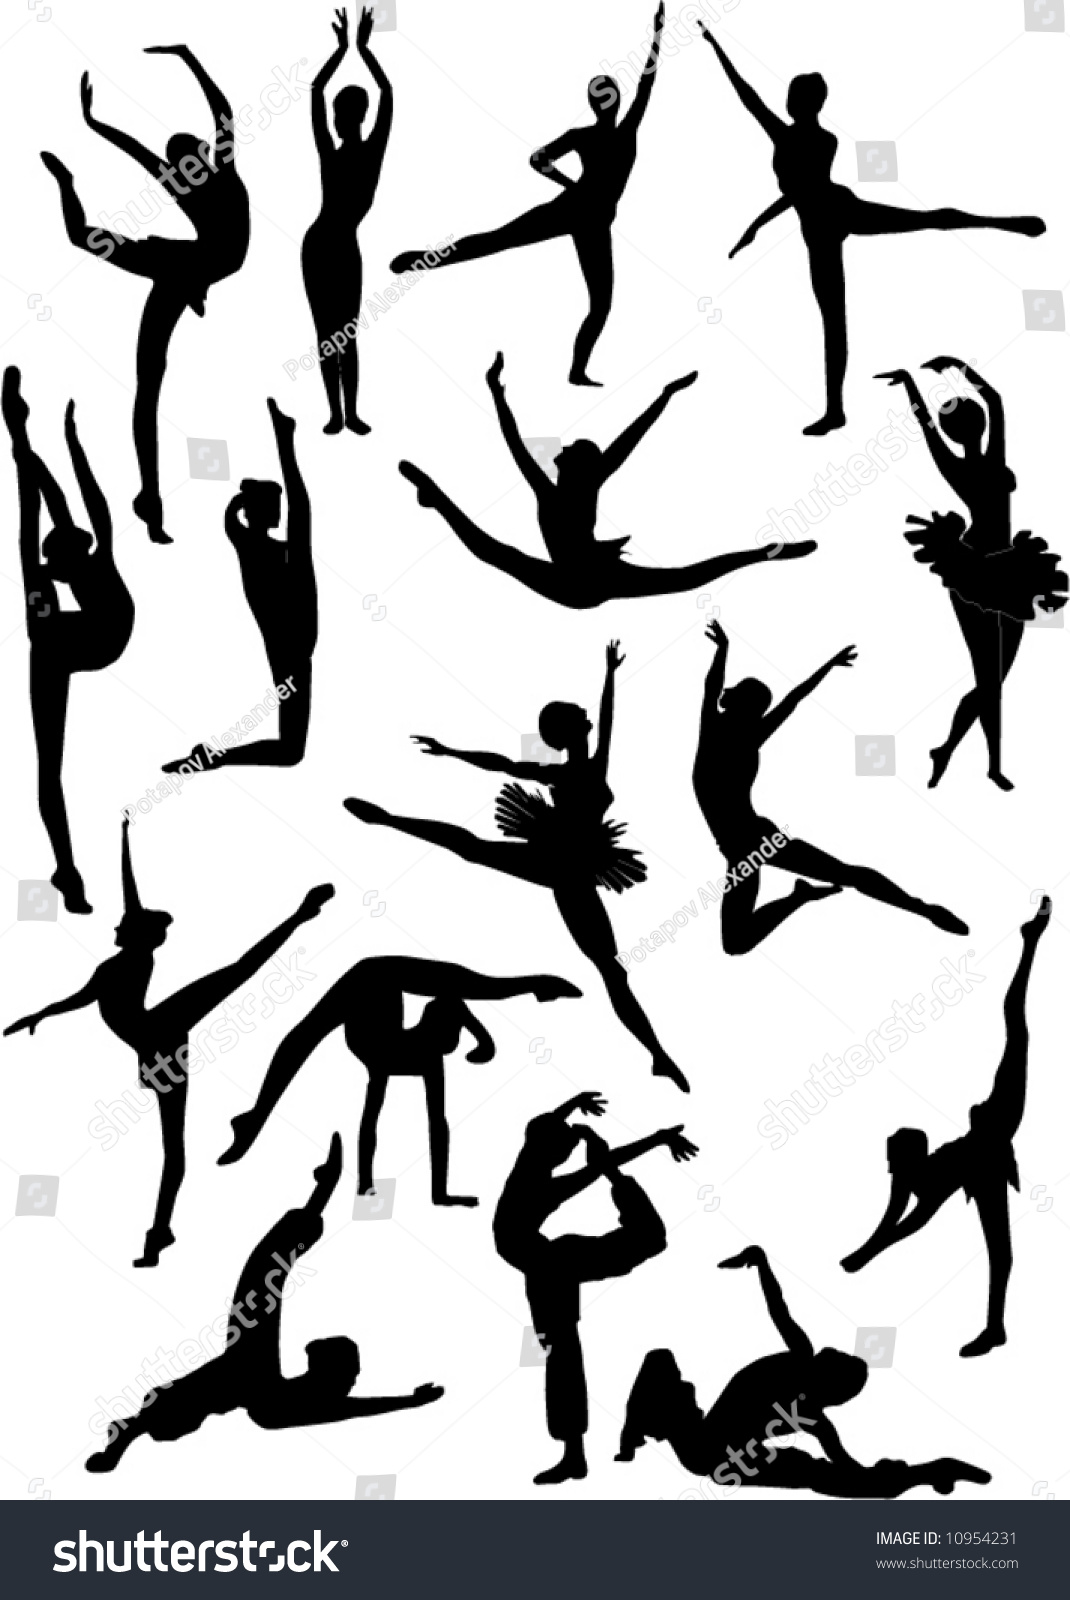 Illustration With Ballet Dancer Silhouettes - 10954231 : Shutterstock